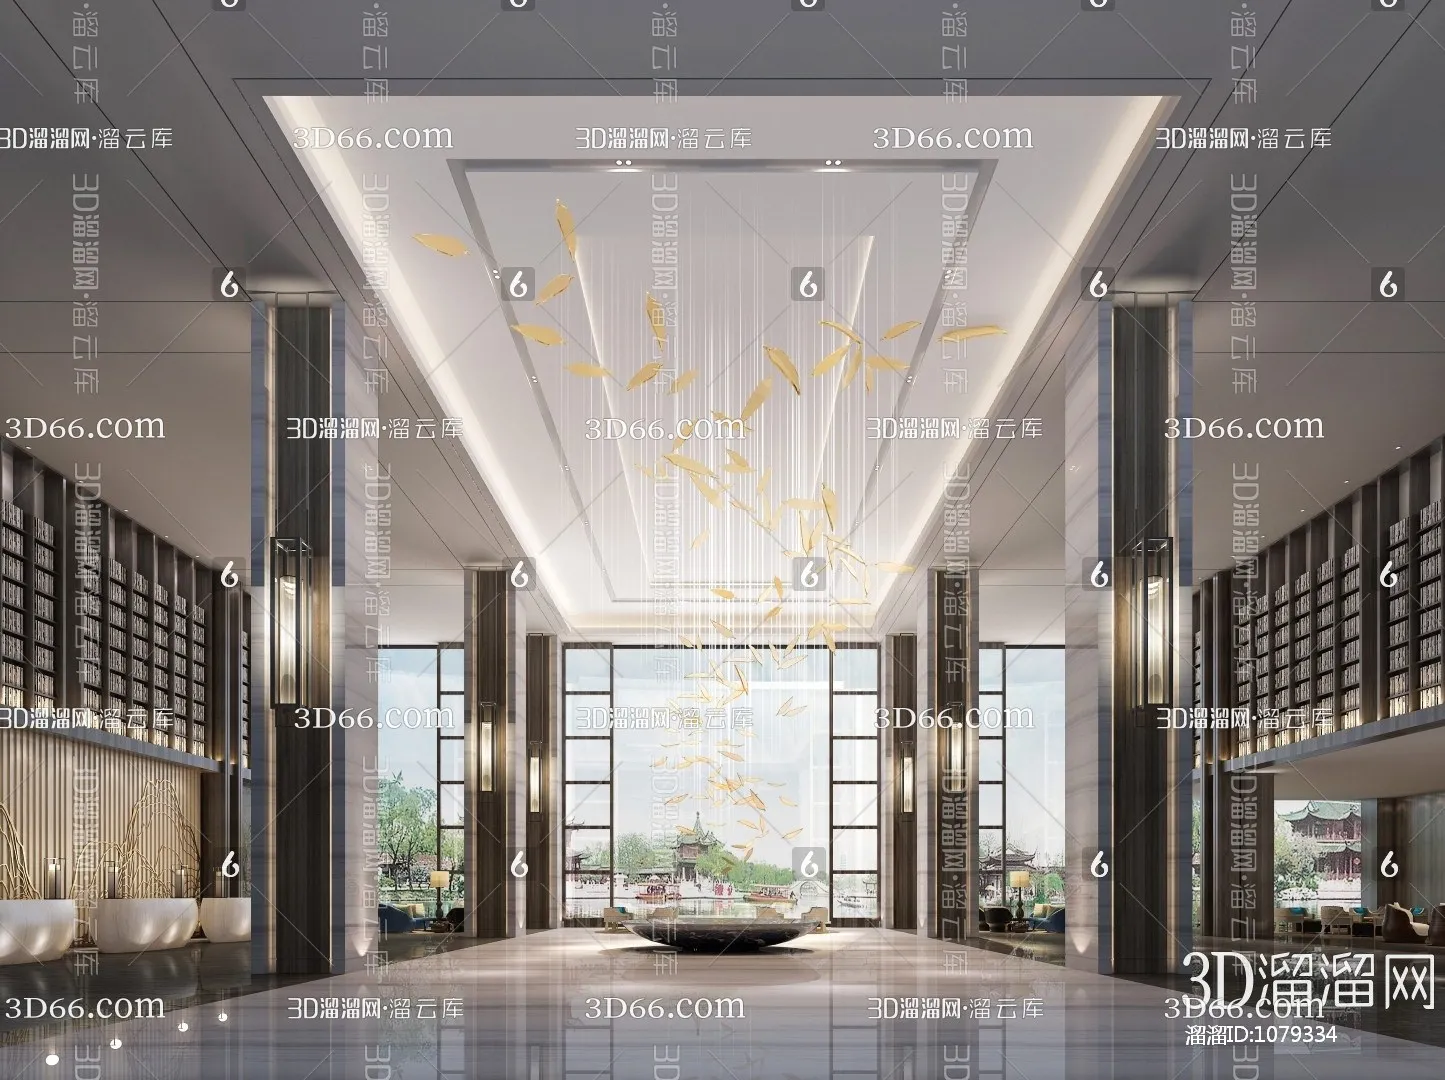 Hotel Lobby 3D Scenes – 0493